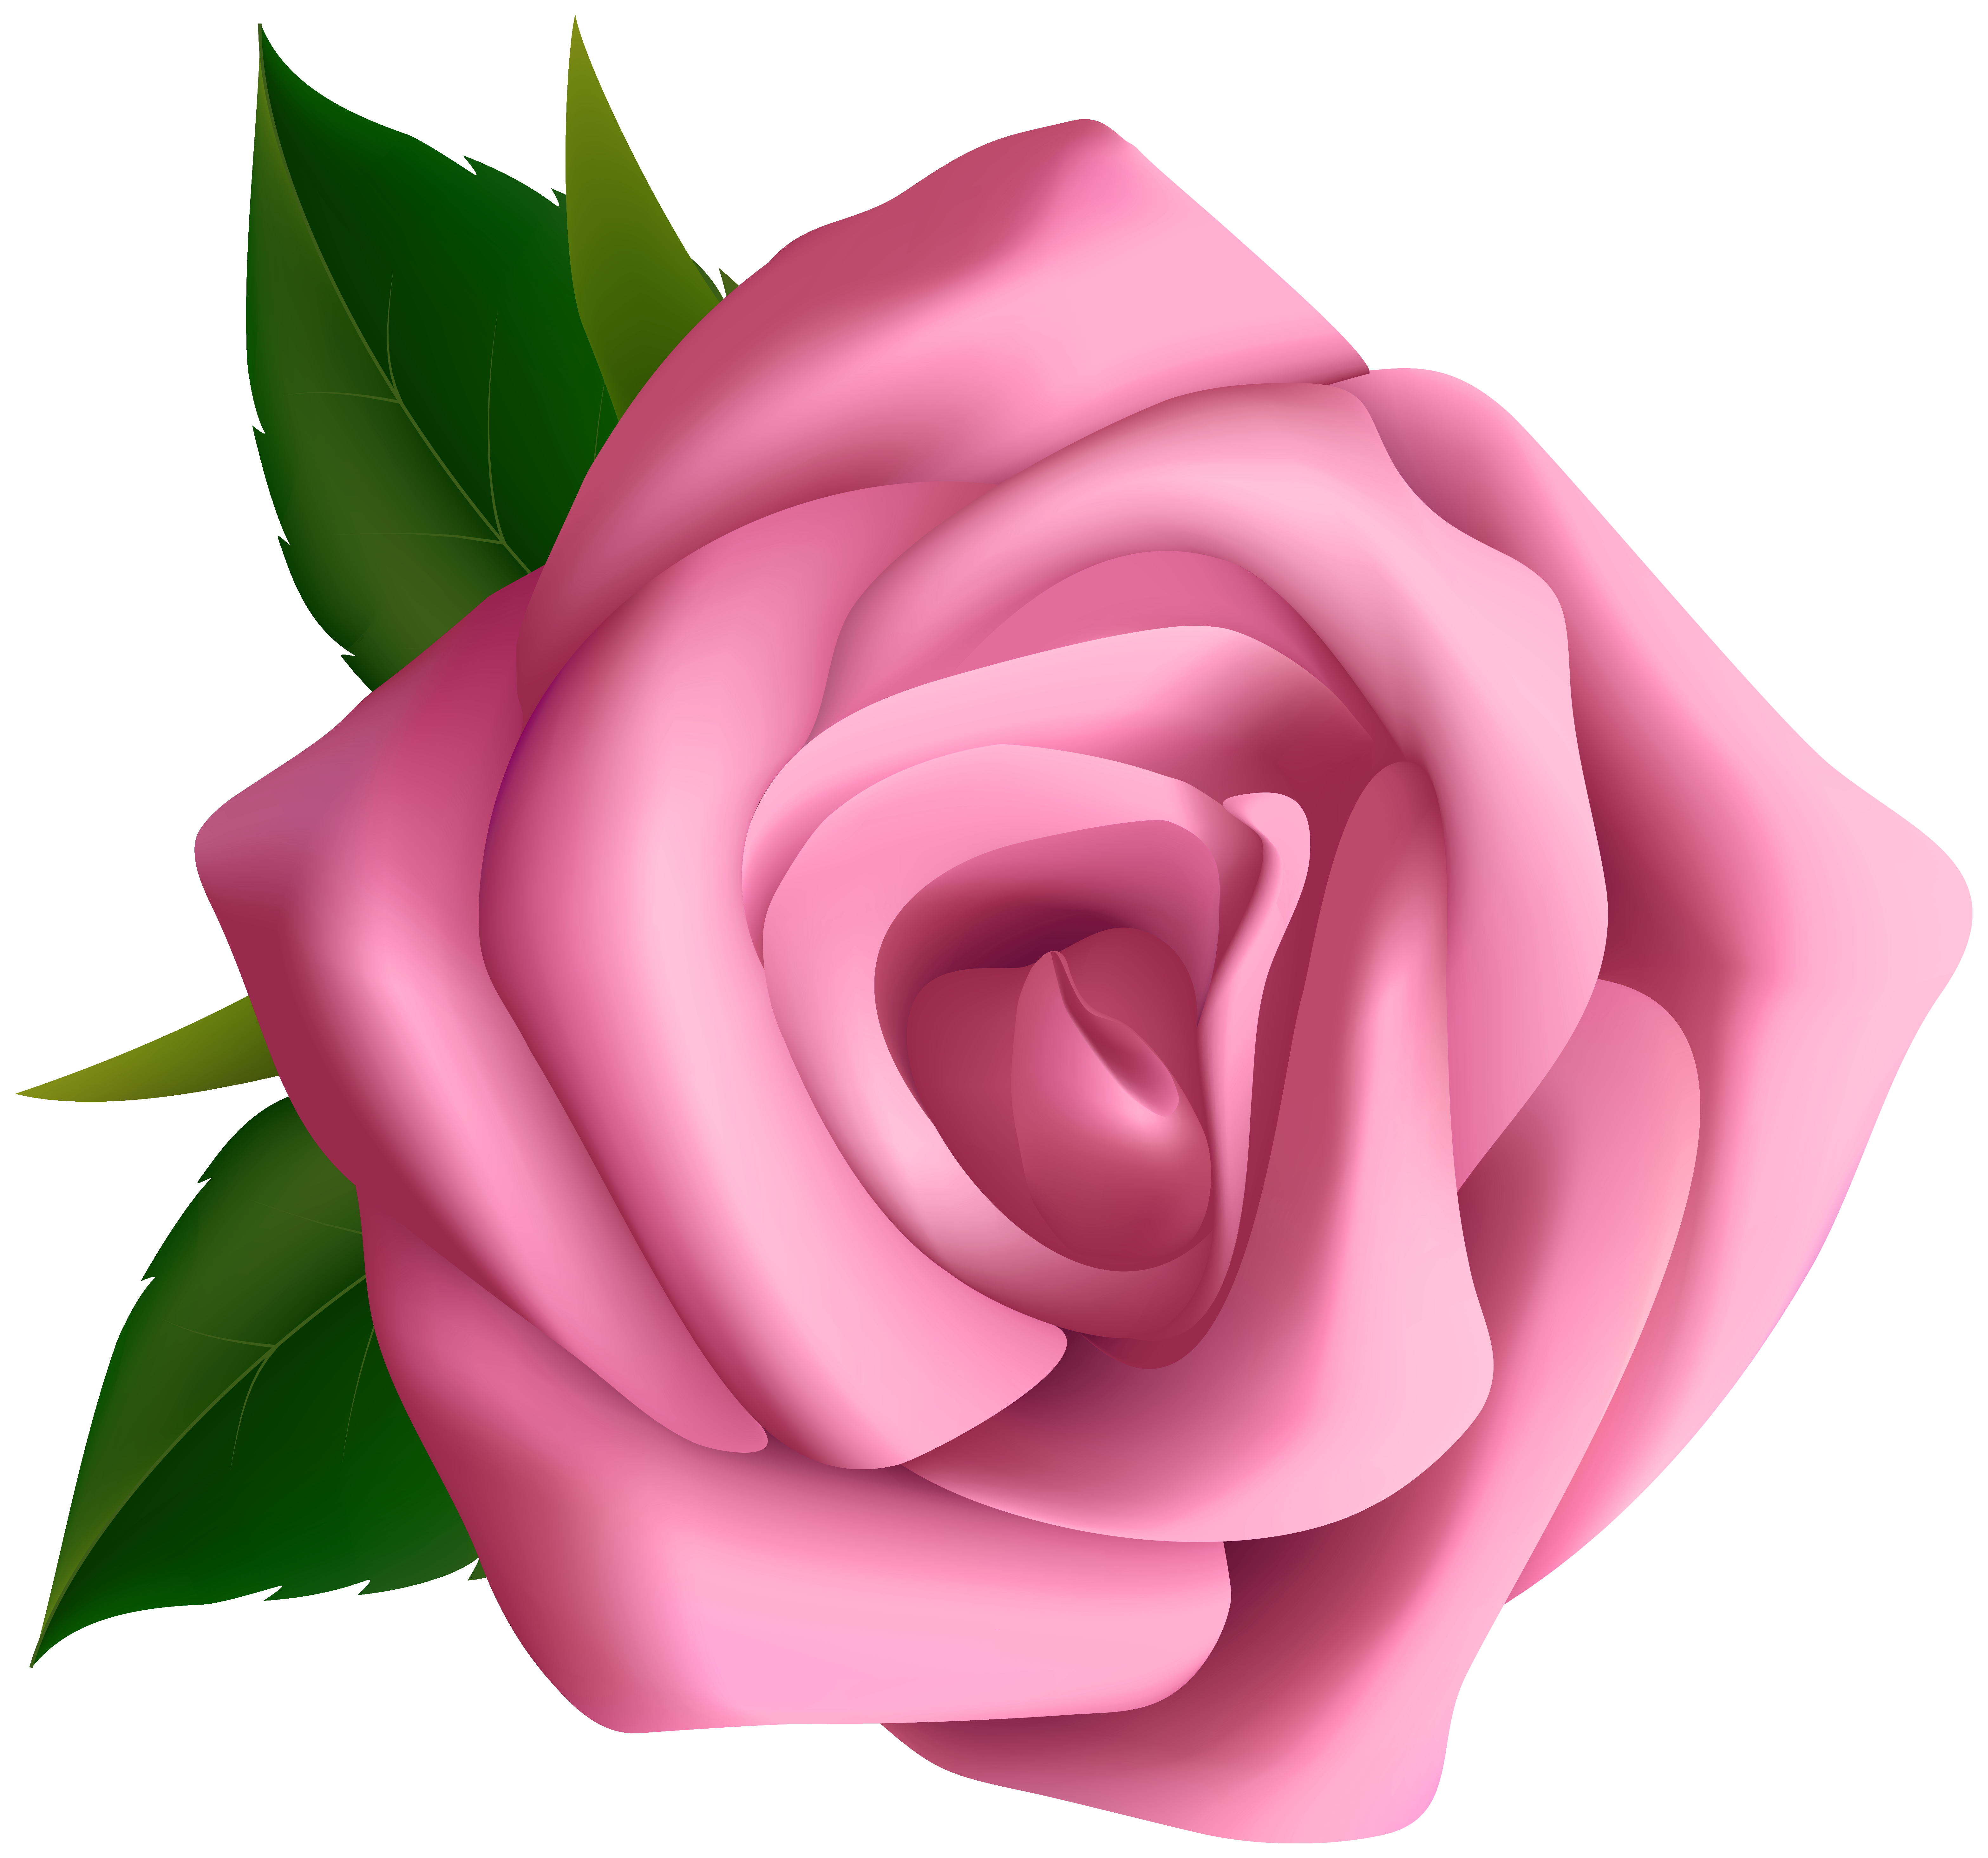 Soft pink rose clipart image